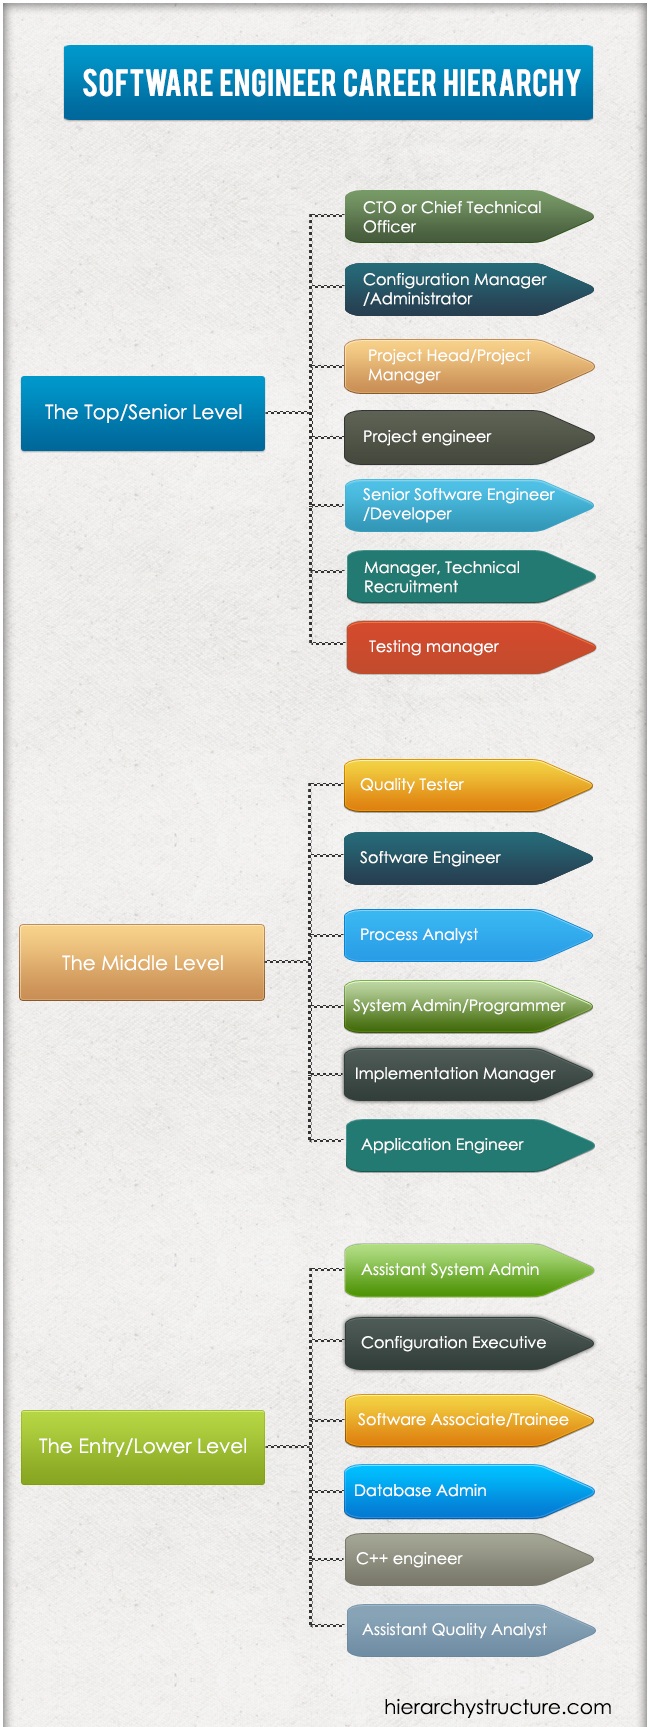 Software Engineer Career Hierarchy